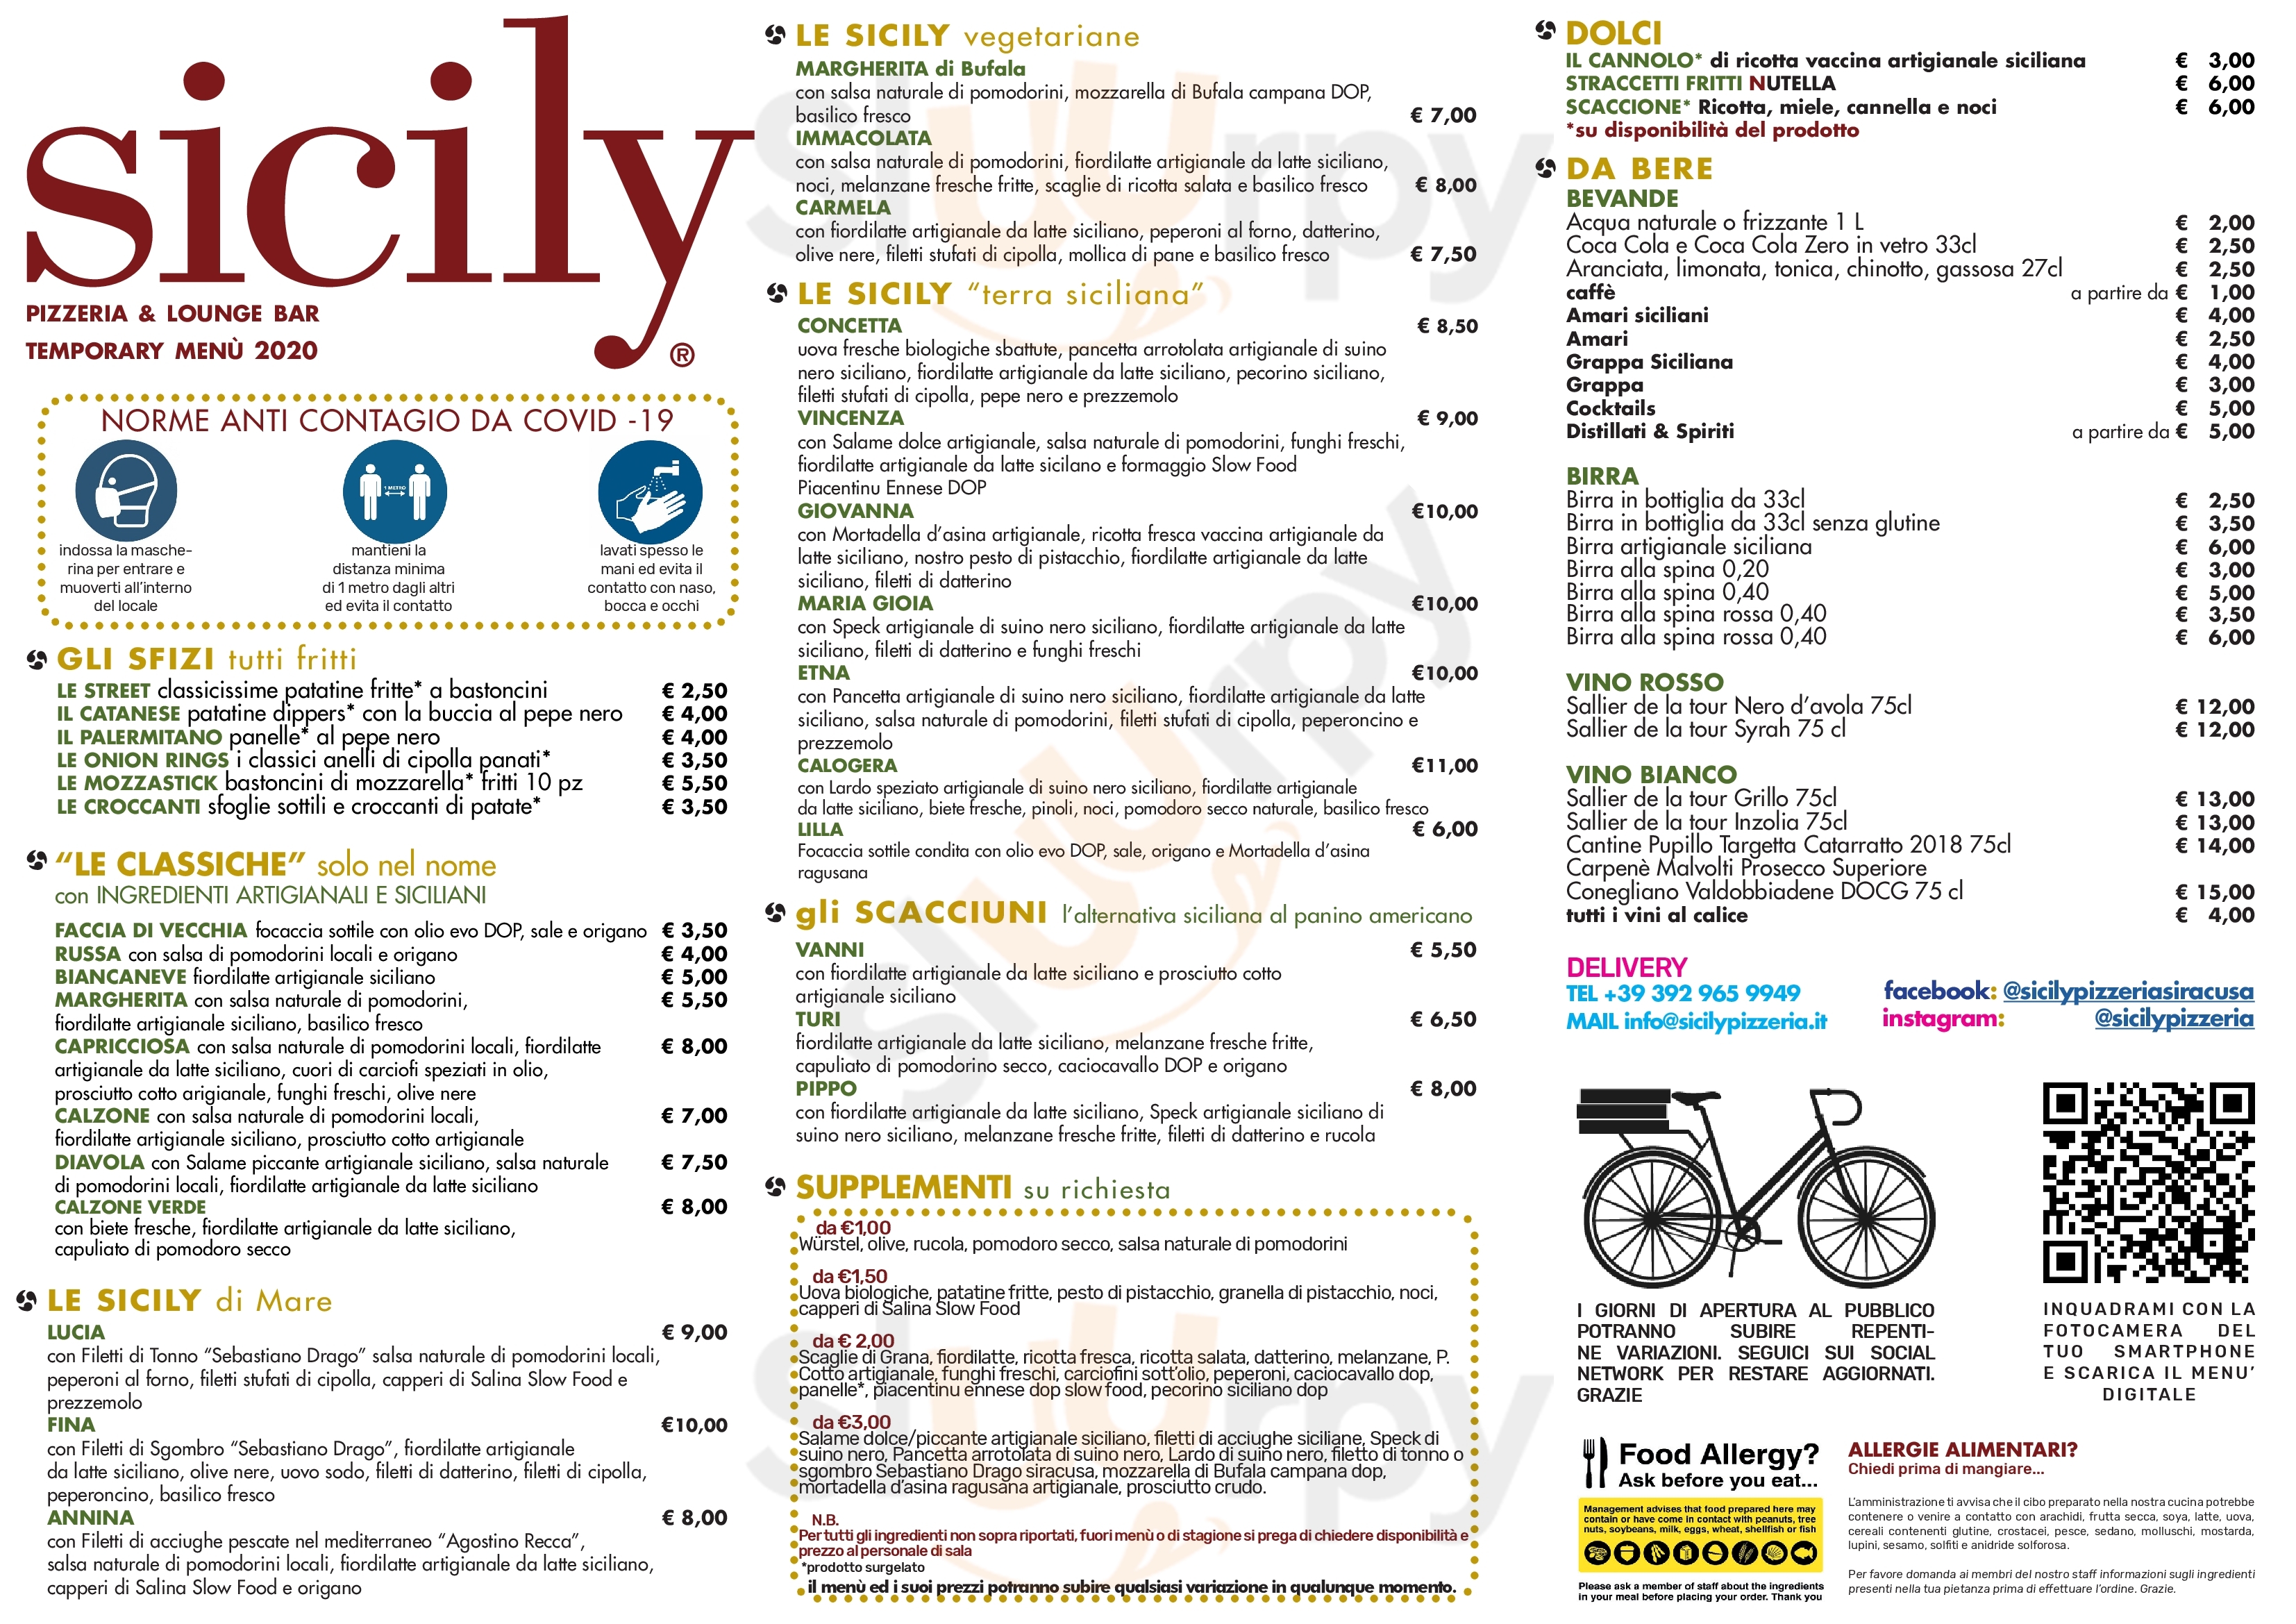 Sicily Pizzeria & Lounge Bar Siracusa menù 1 pagina